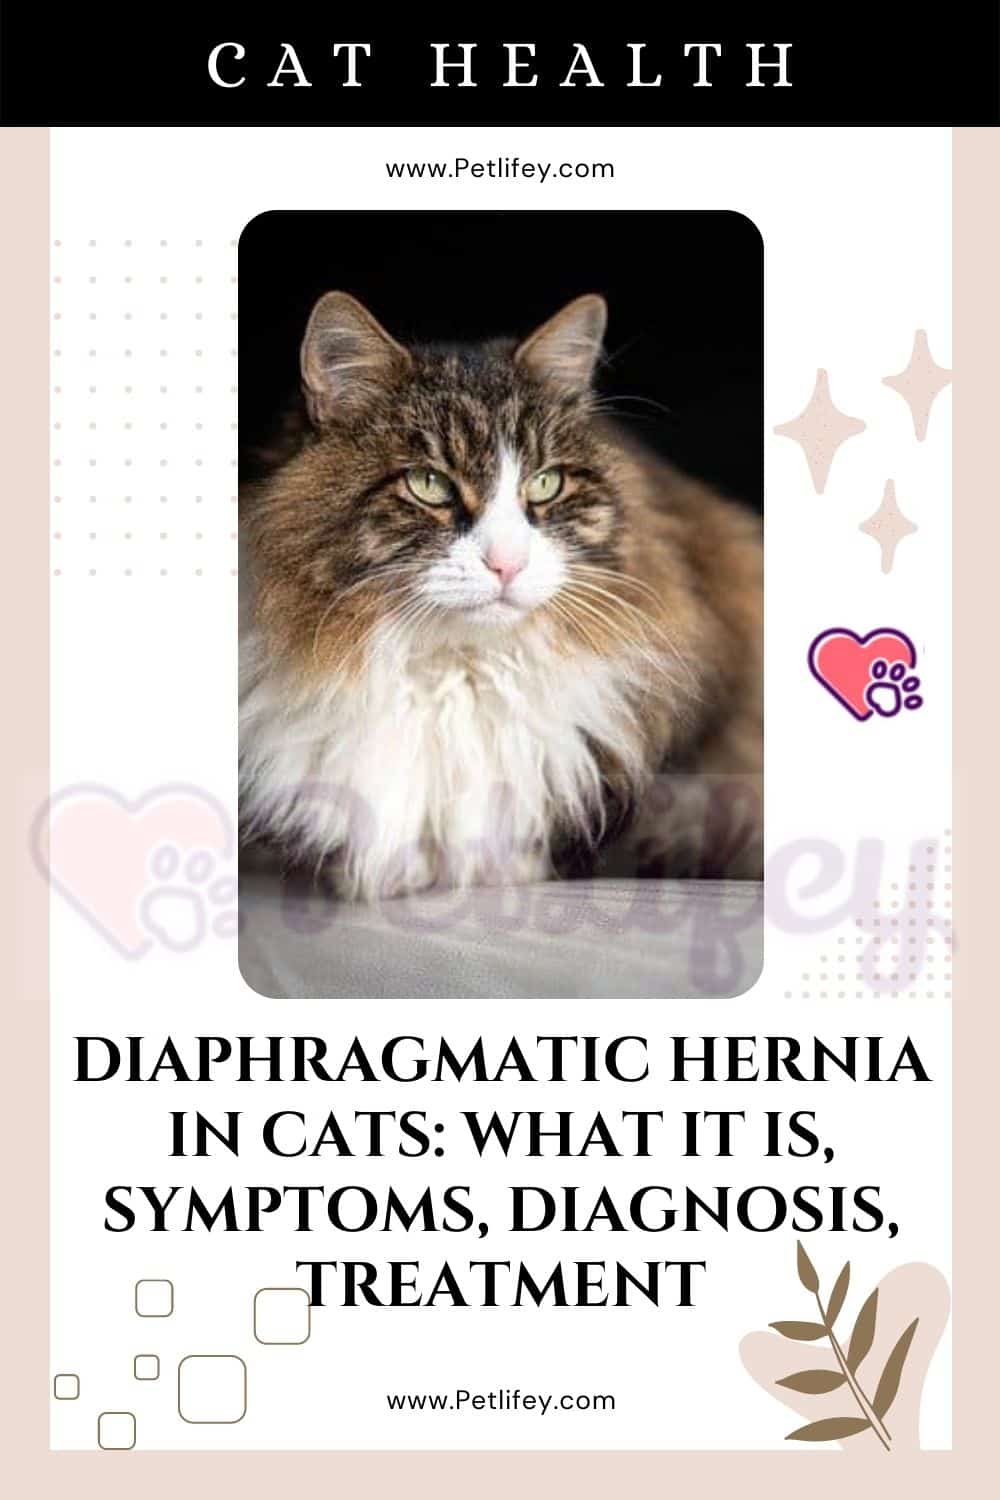 Diaphragmatic hernia in cats